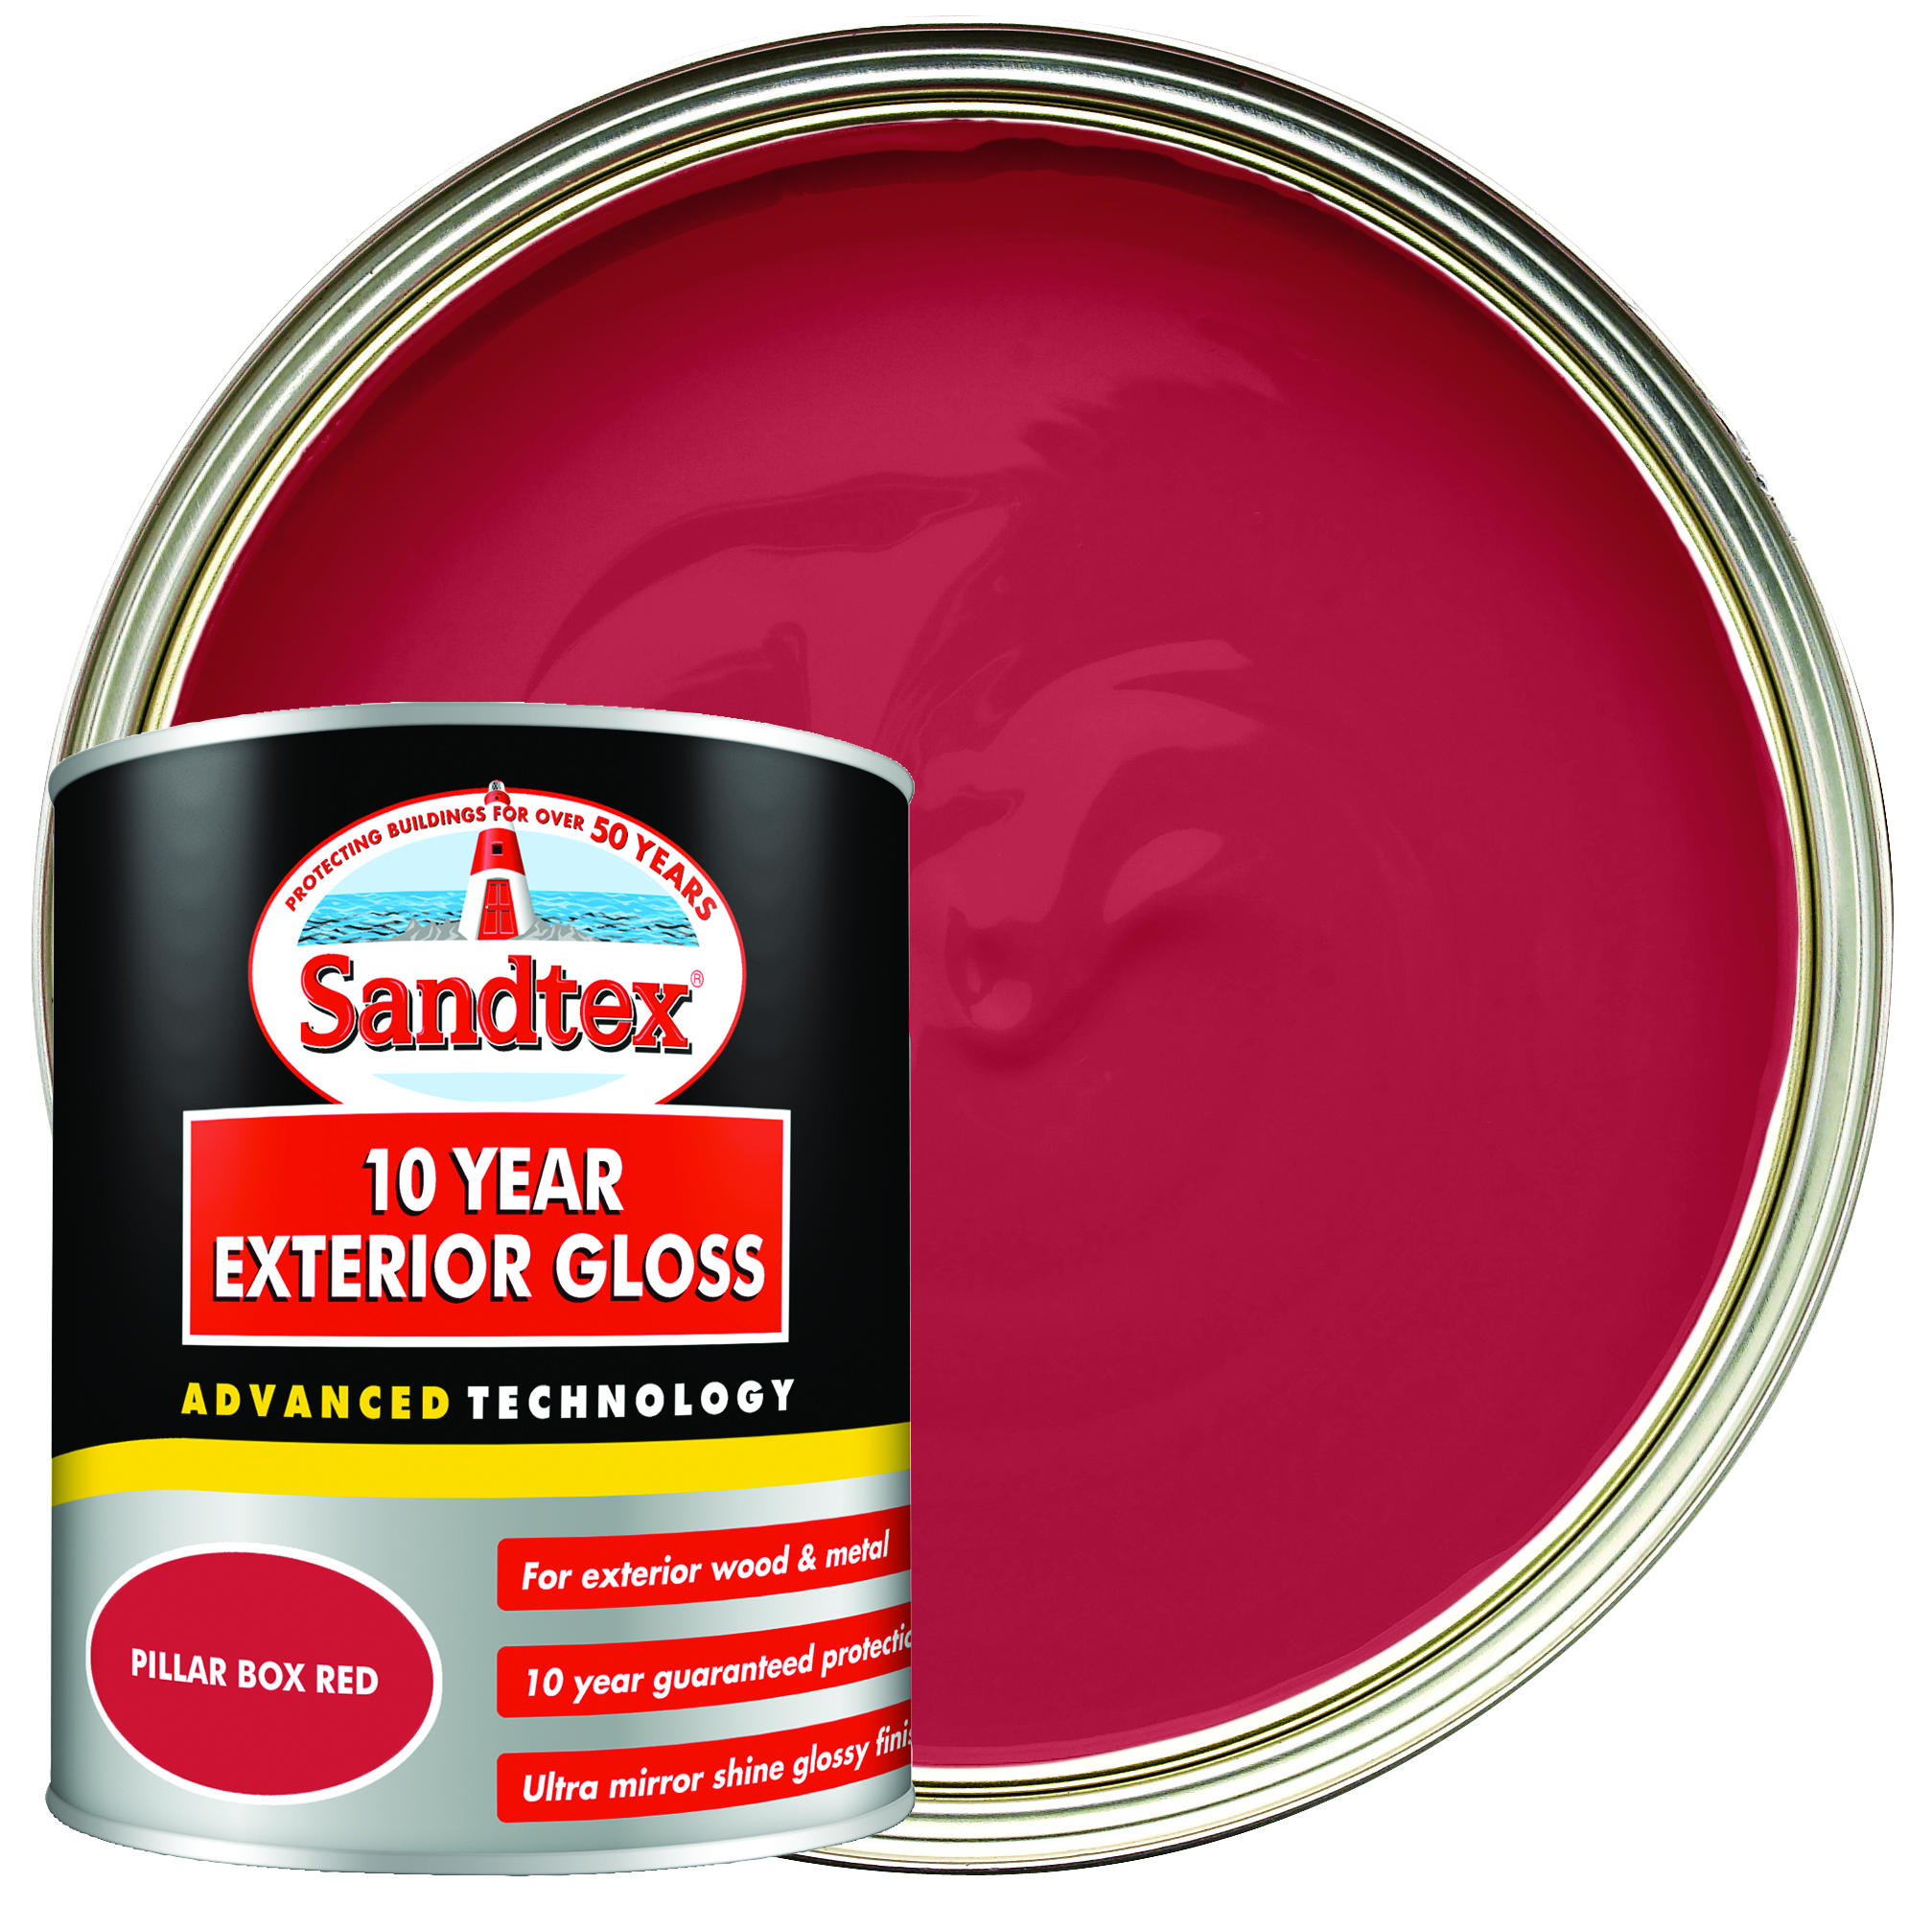 Image of Sandtex 10 Year Exterior Gloss Paint - Pillar Box Red - 750ml